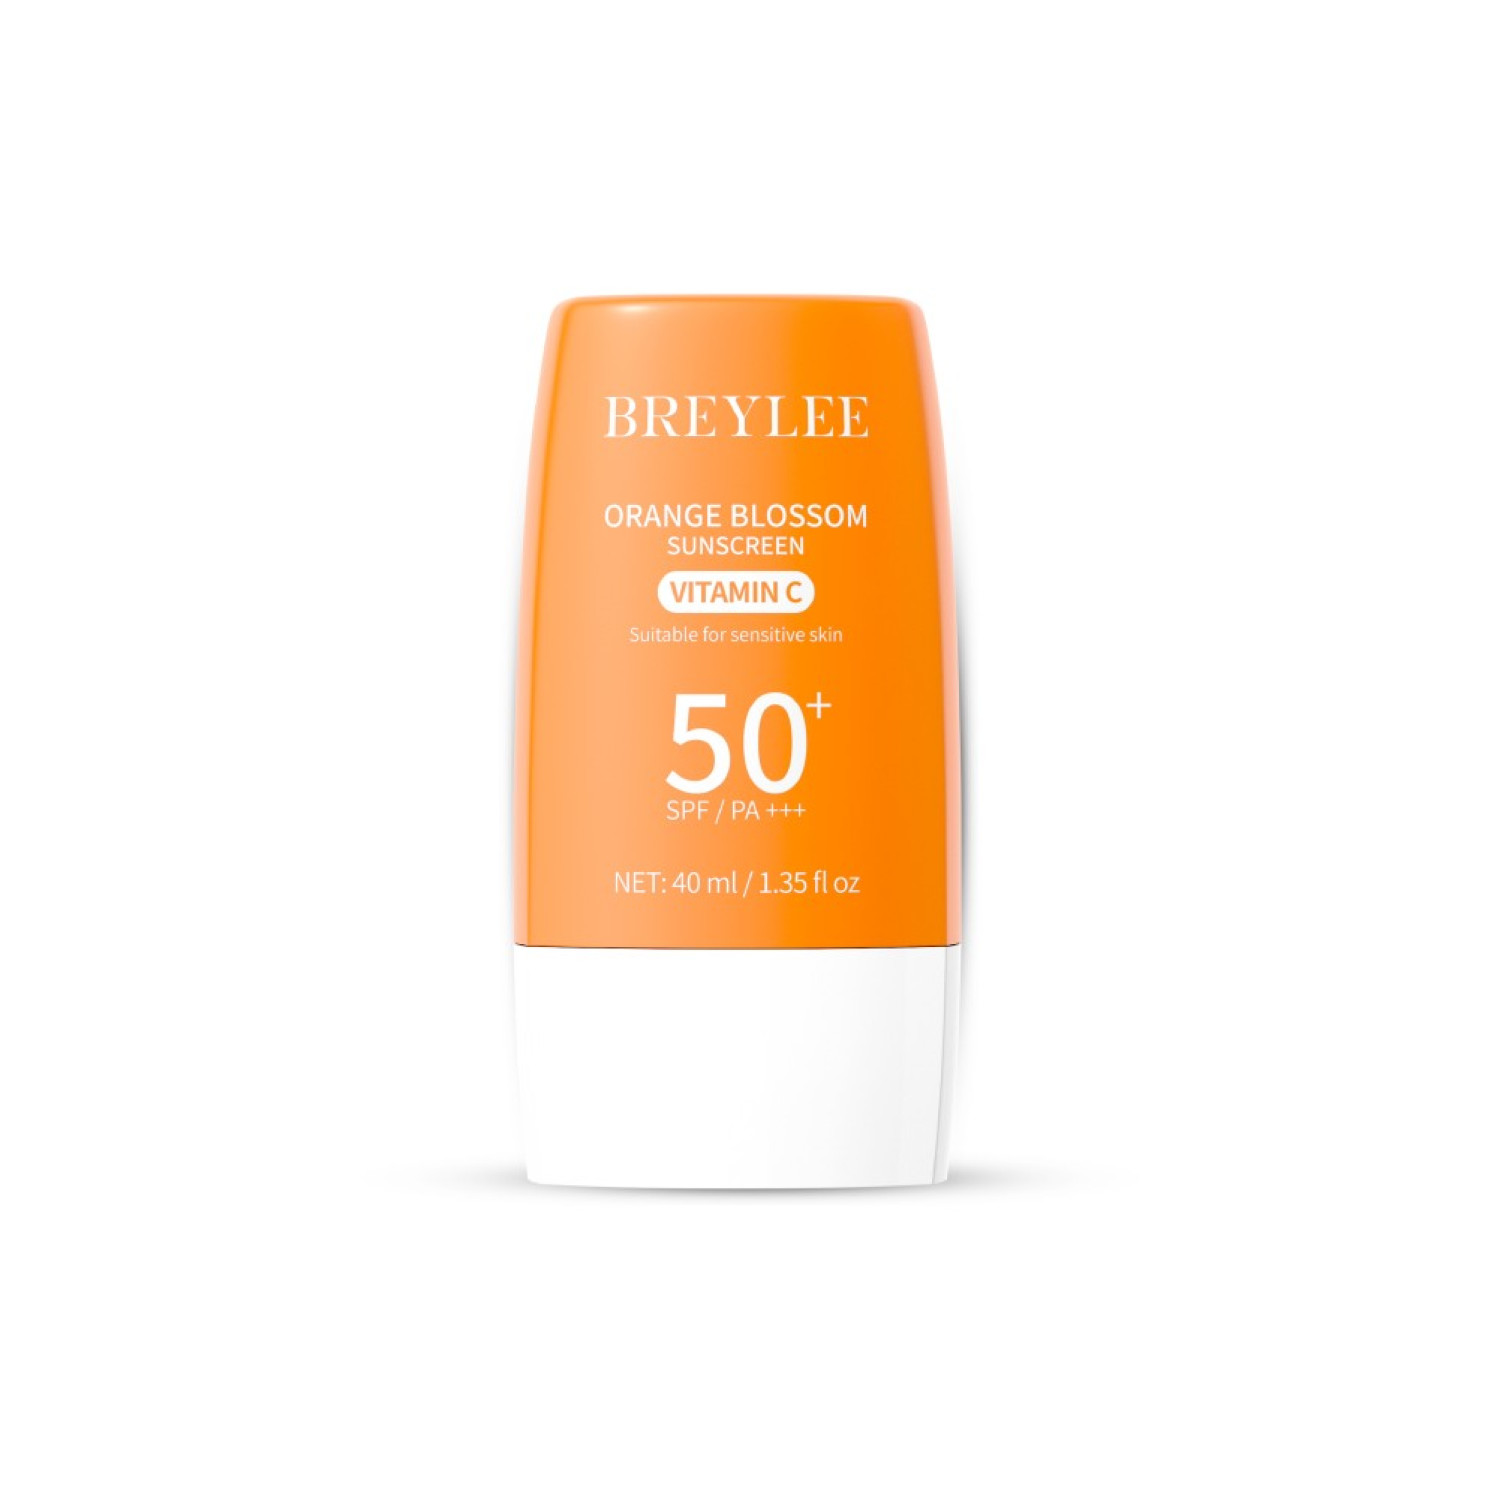 Breylee Orange Blossom Sunscreen 